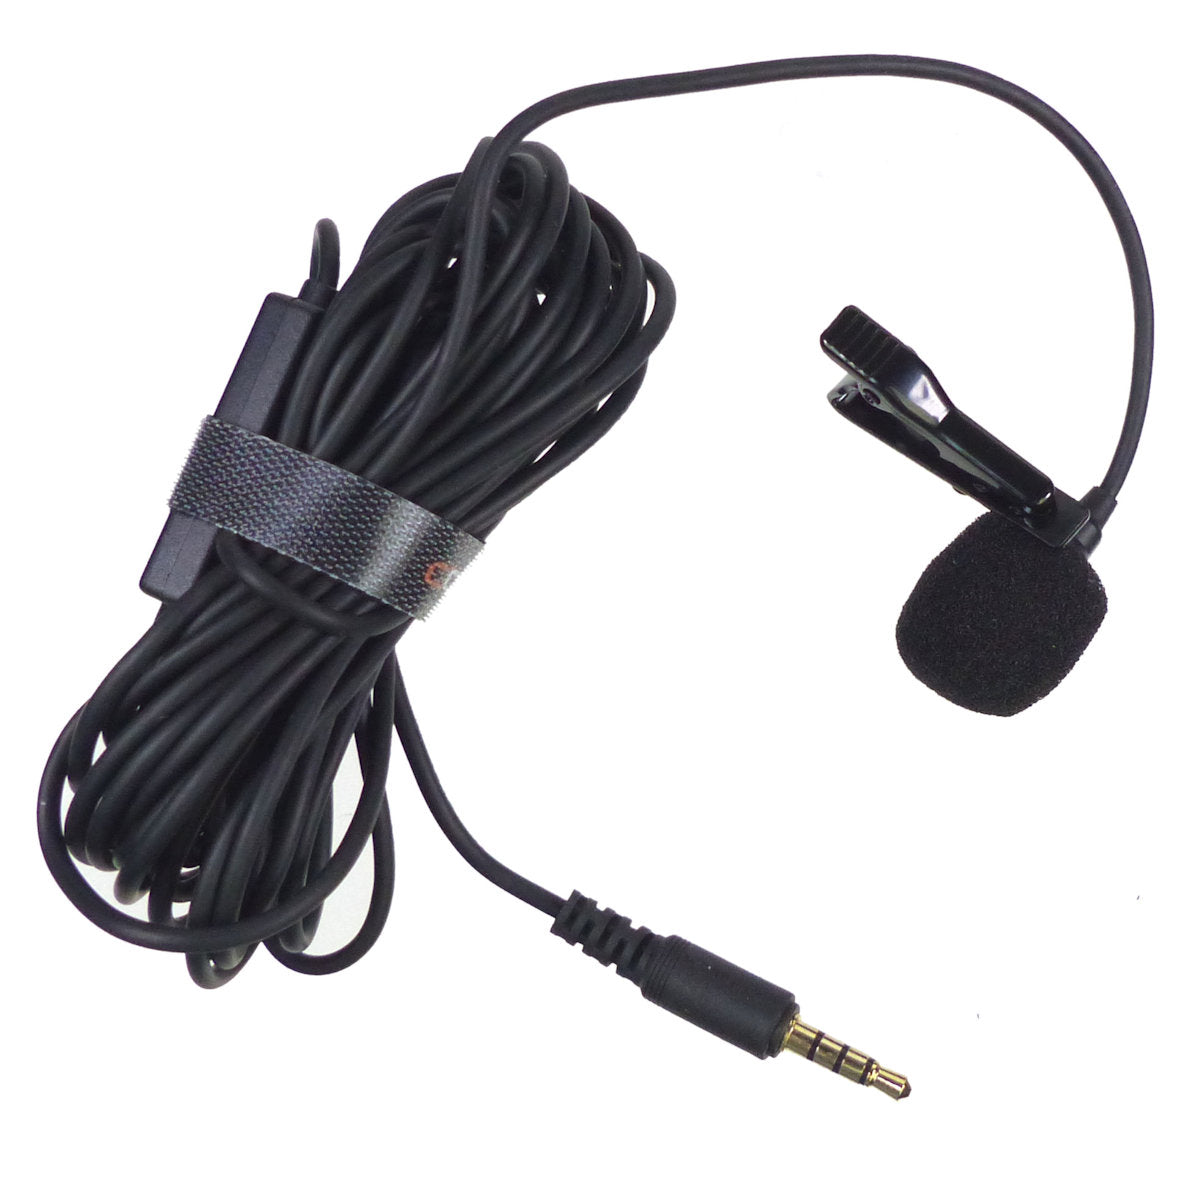 Compre Micrófono F1 Micrófono Con Cable Móvil Recogida Micrófono